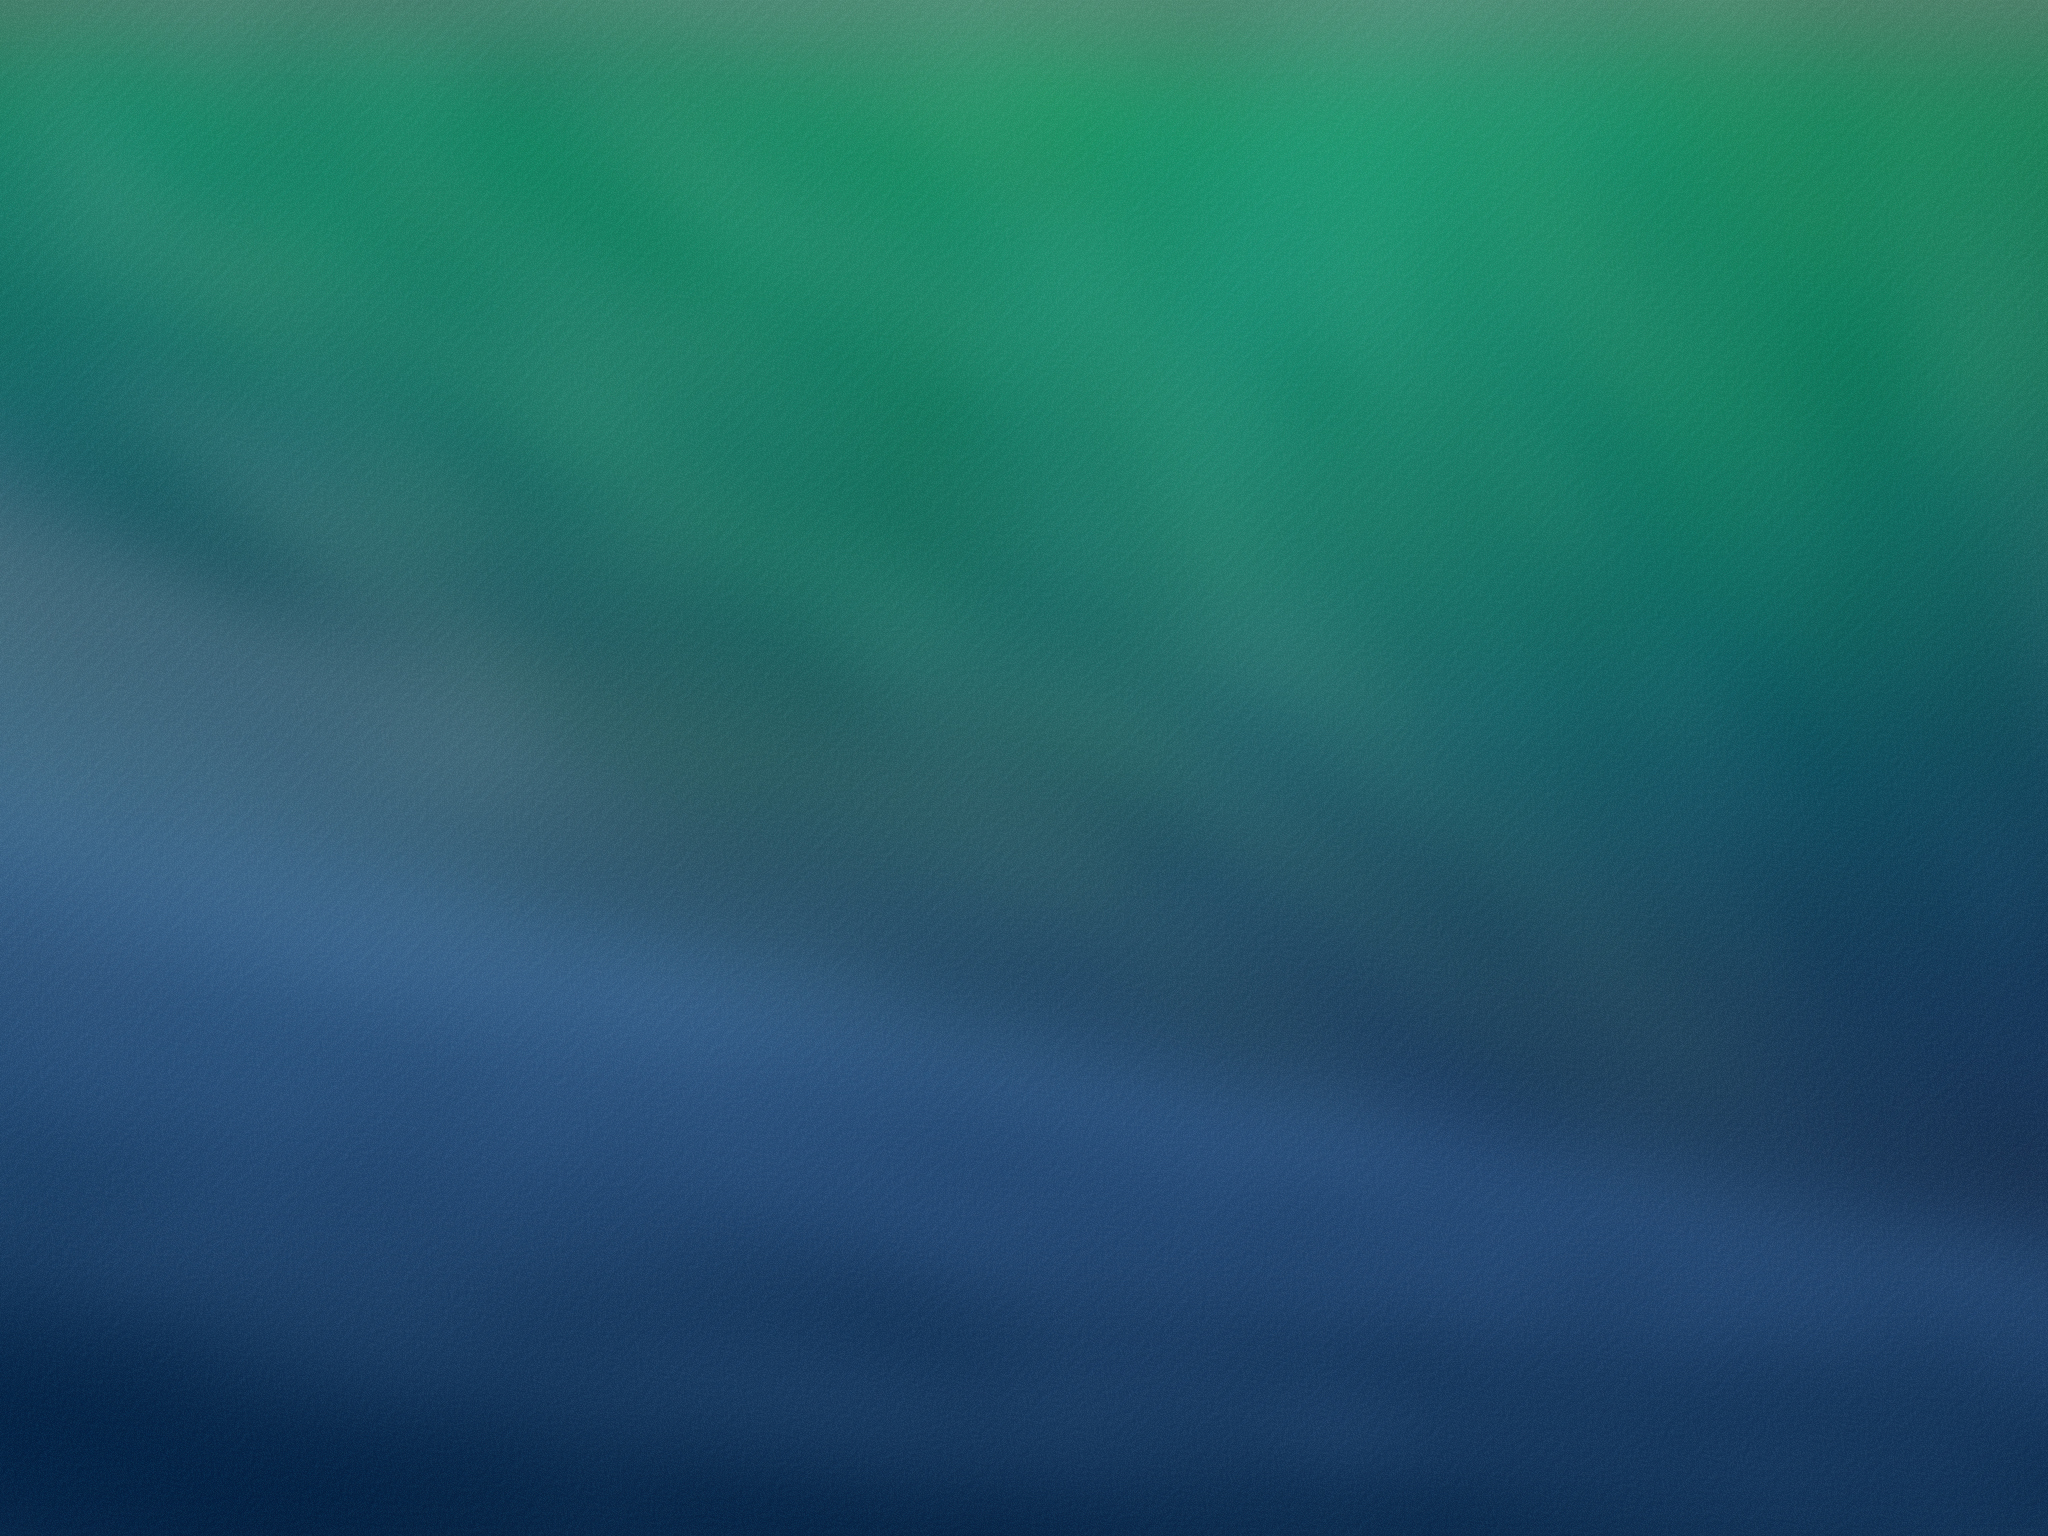 fondos de pantalla ipad hd 2048x1536,azul,verde,agua,turquesa,cielo